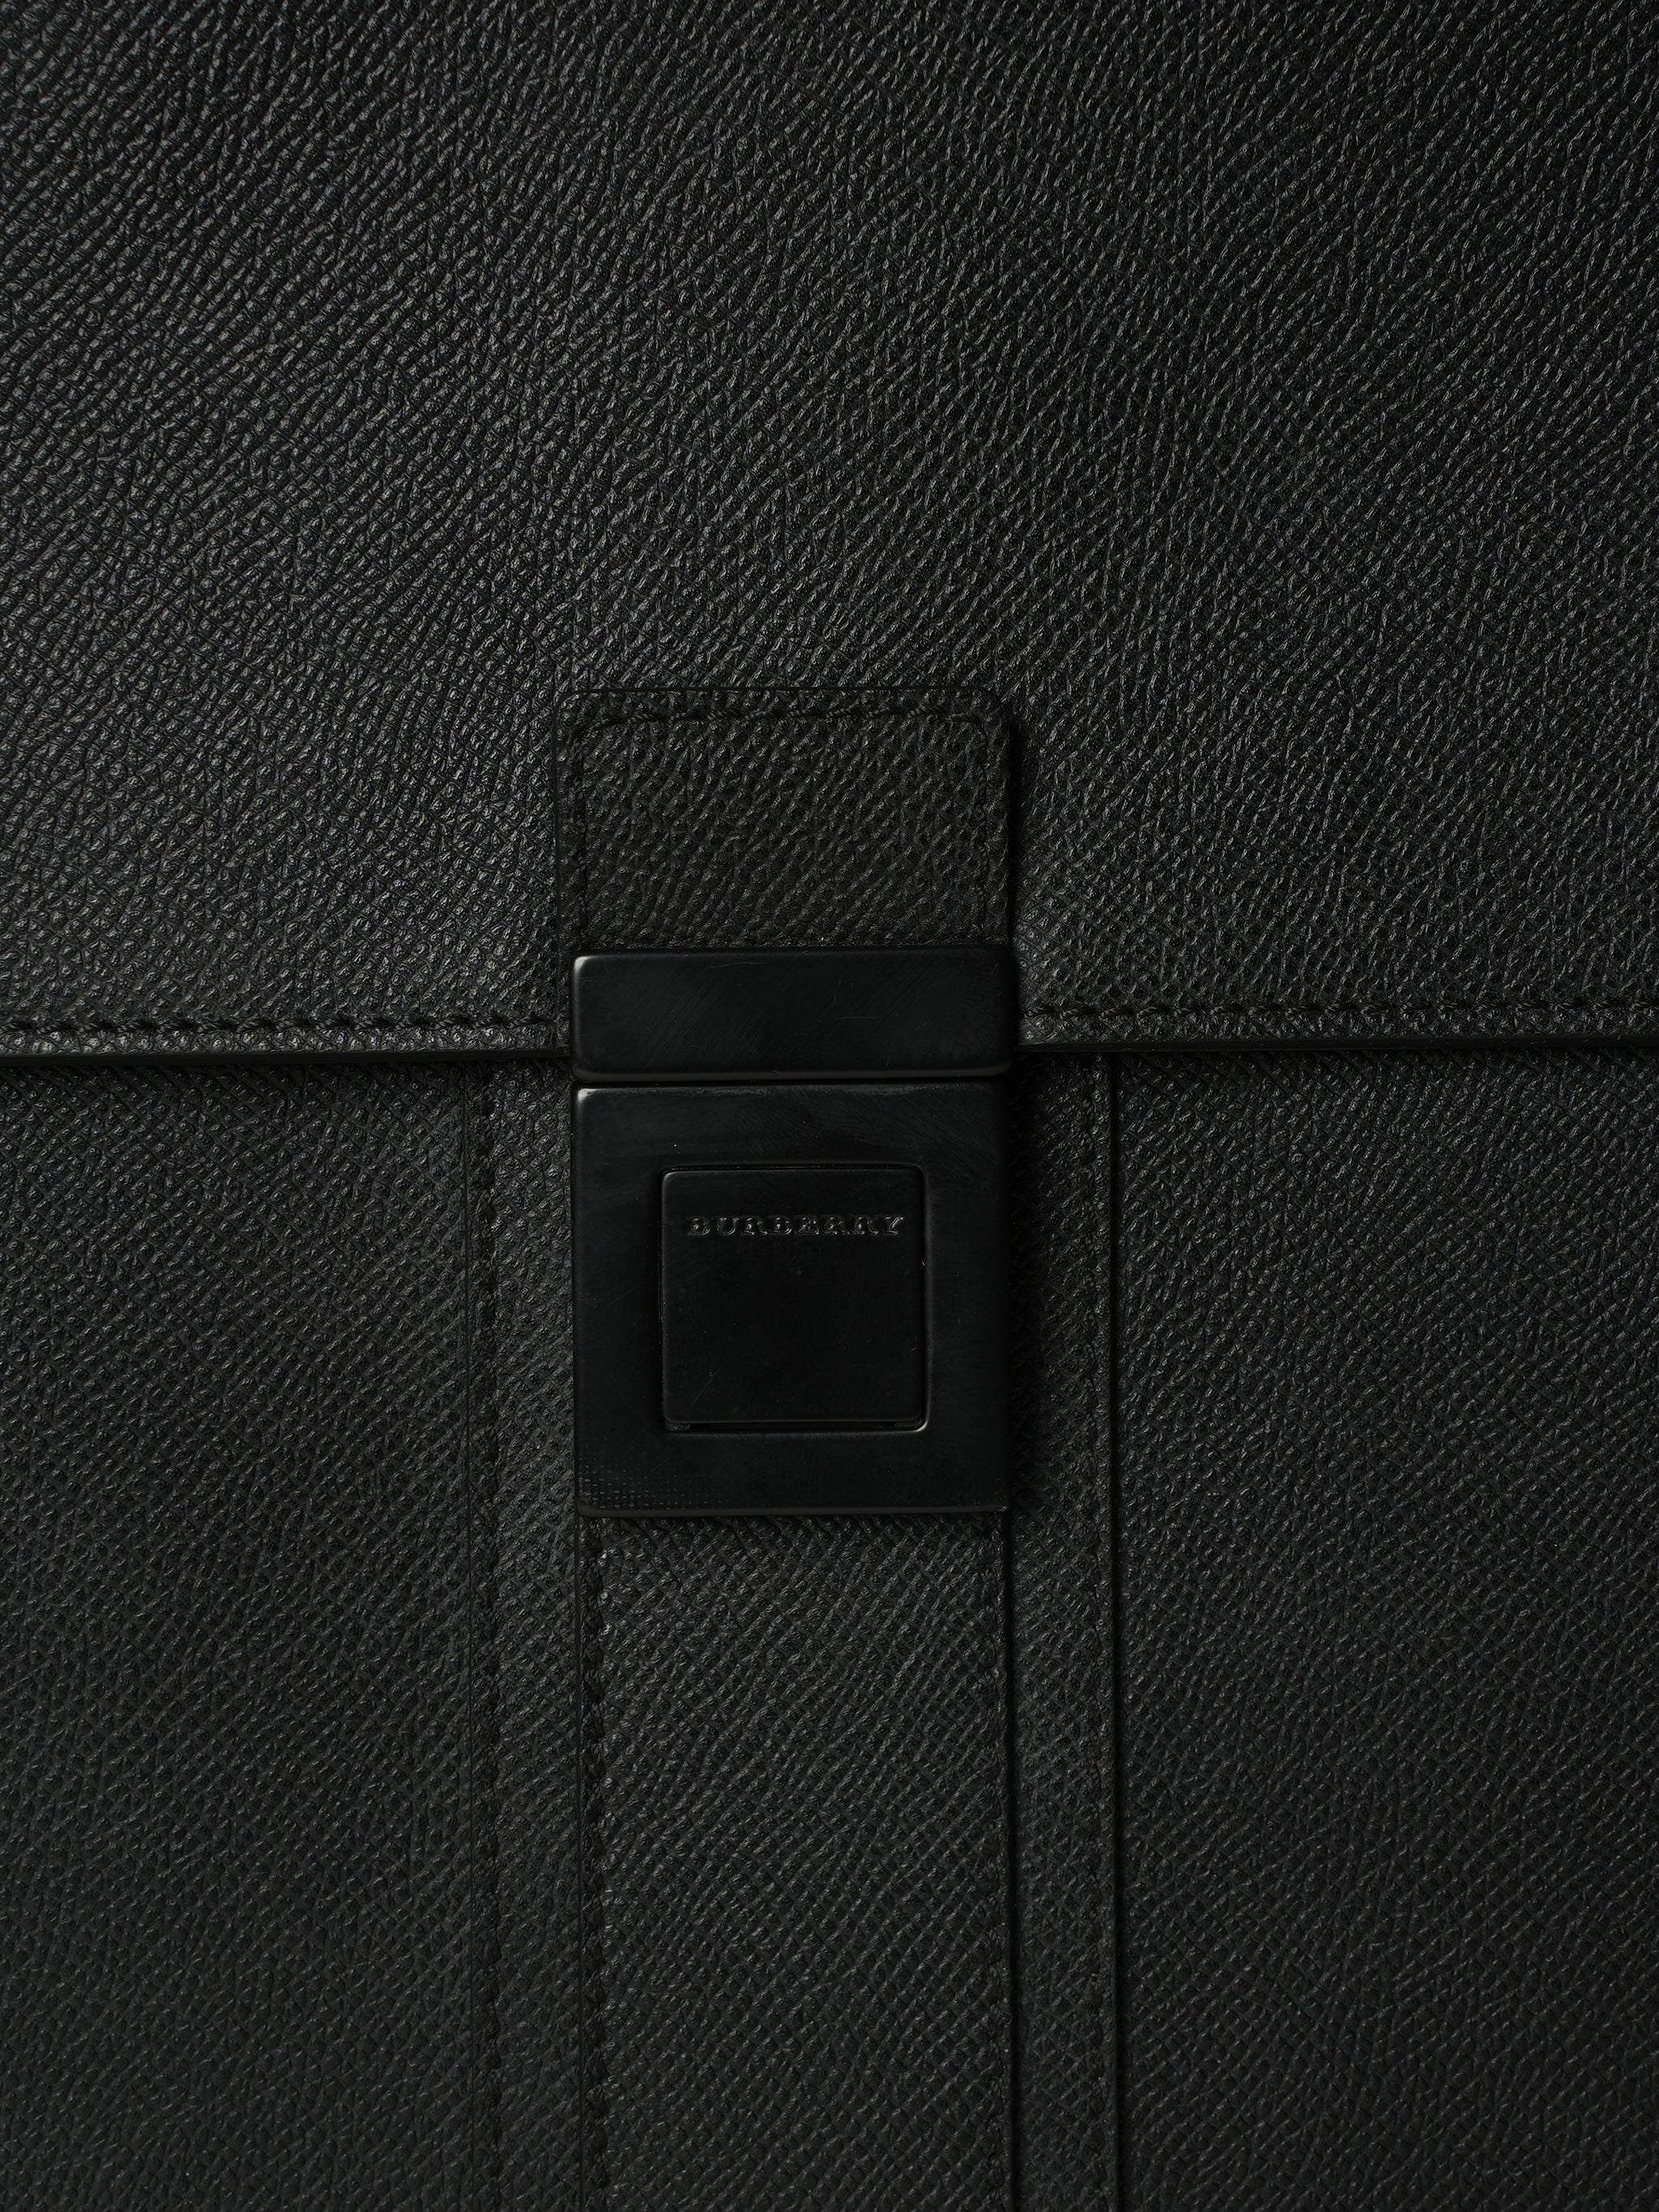 NWT Burberry Avondale Large Brown Perforated Leather Bag Hobo Purse Handbag  | eBay